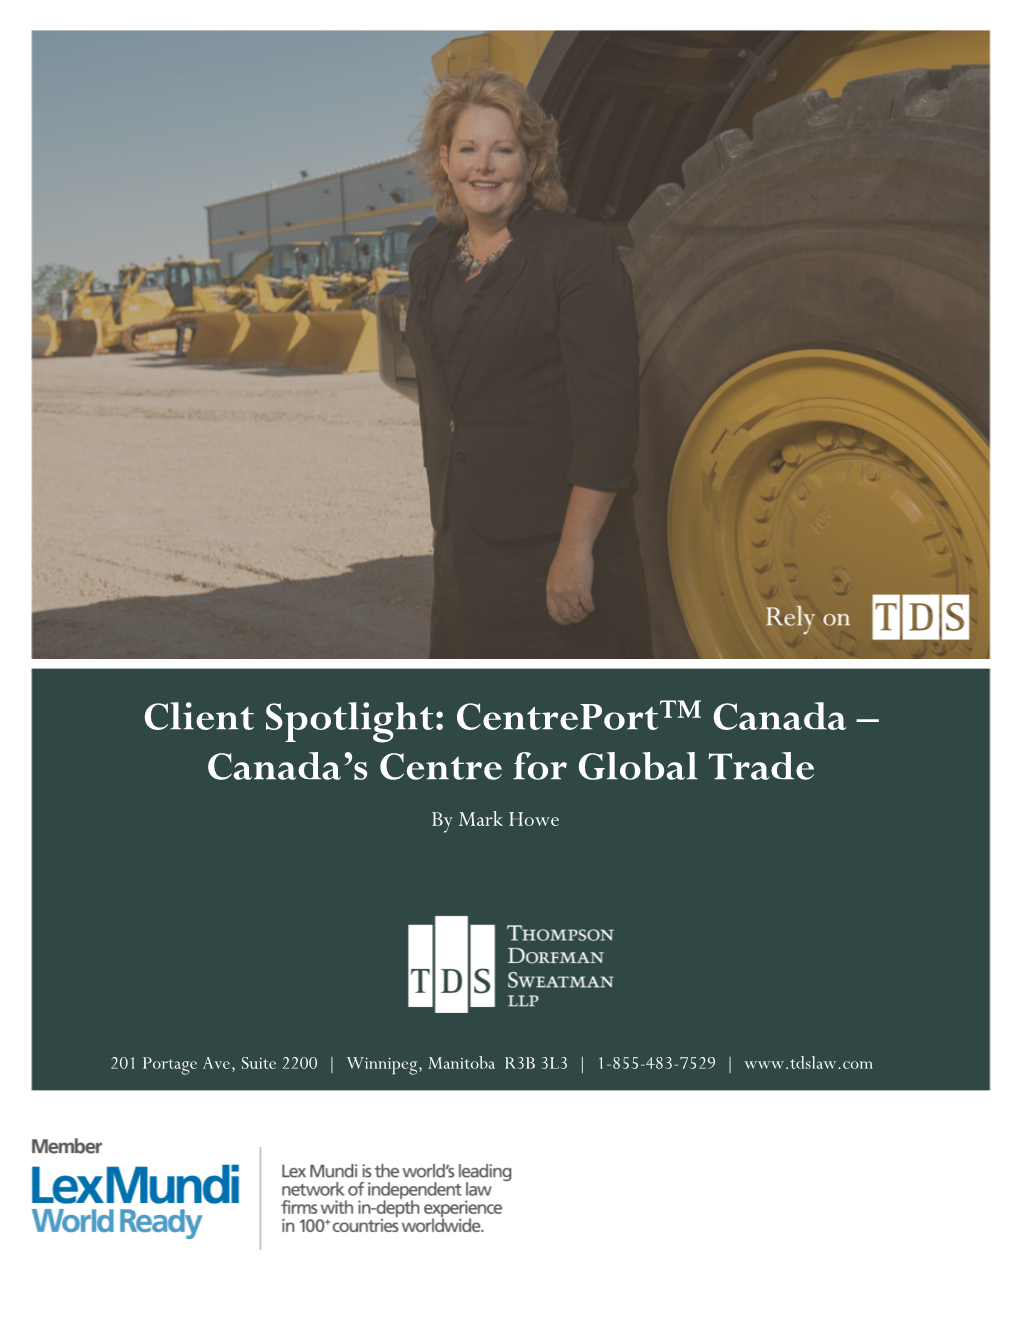 Client Spotlight Centreport Canada